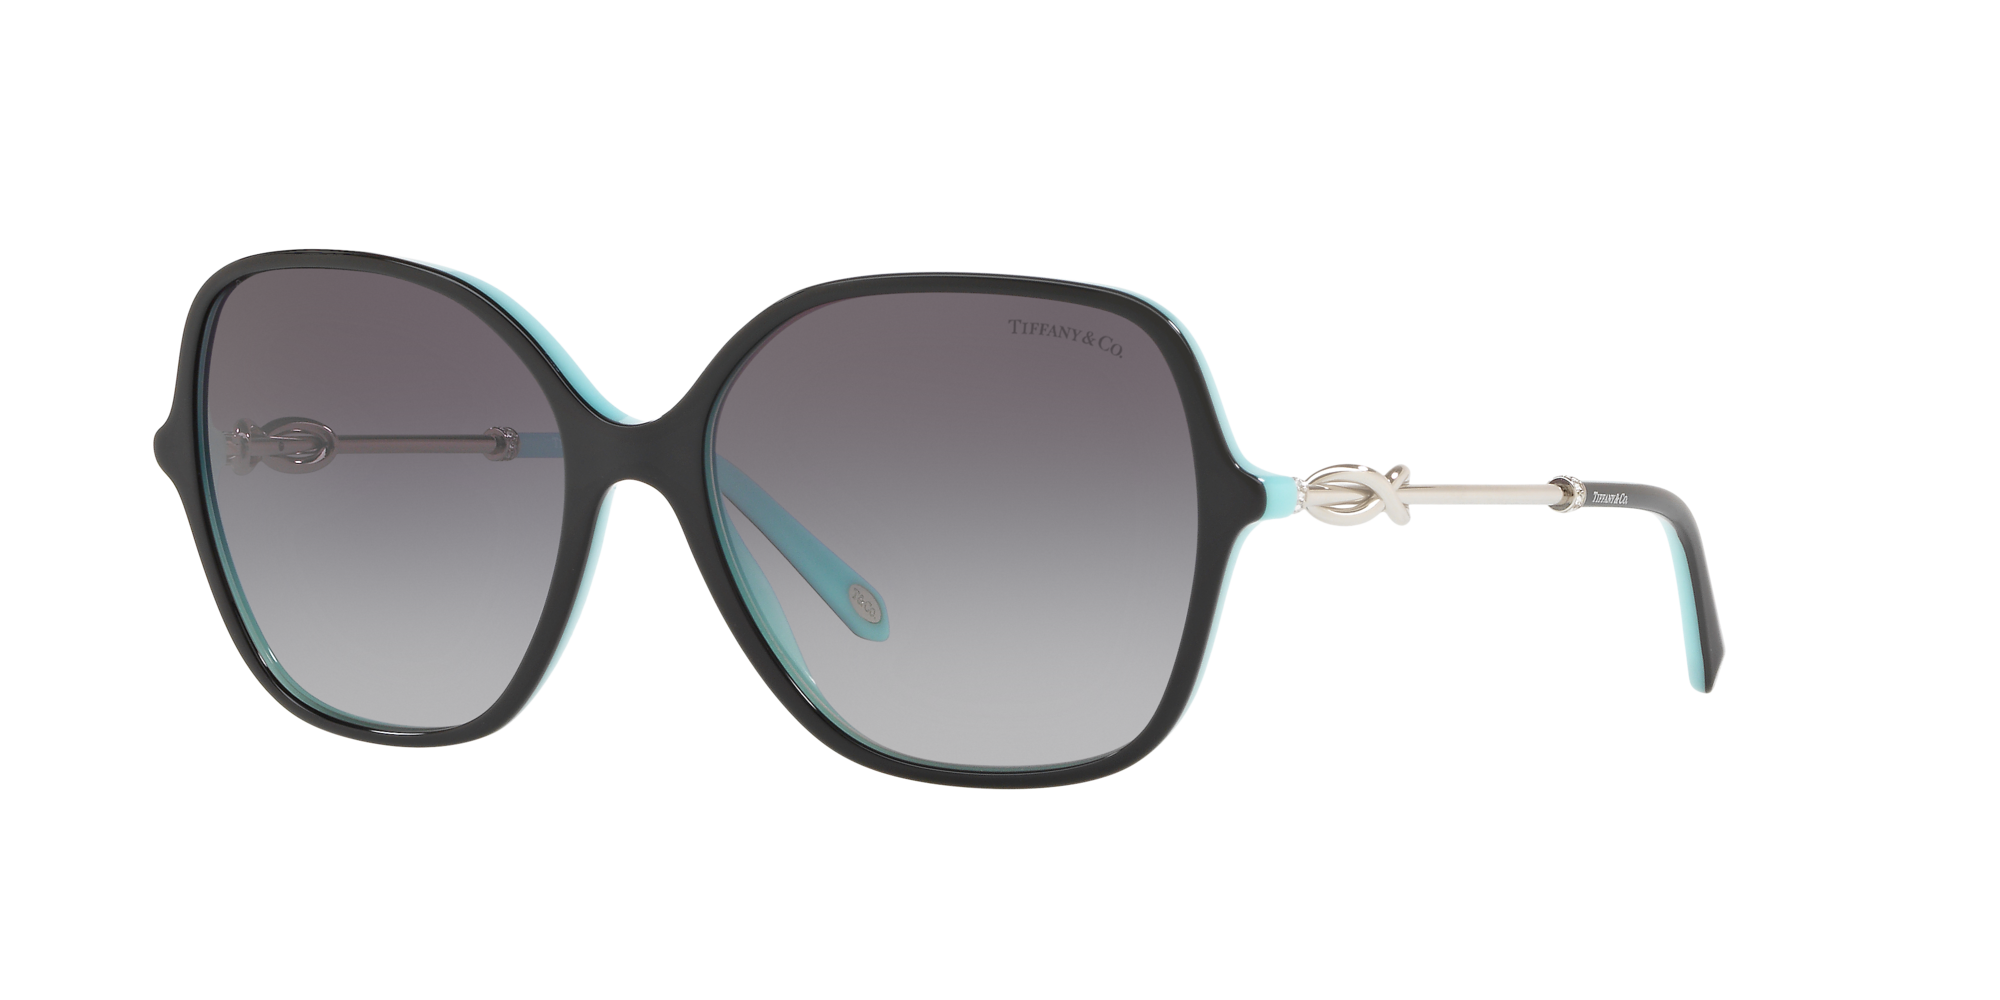 tiffany's sunglasses sale